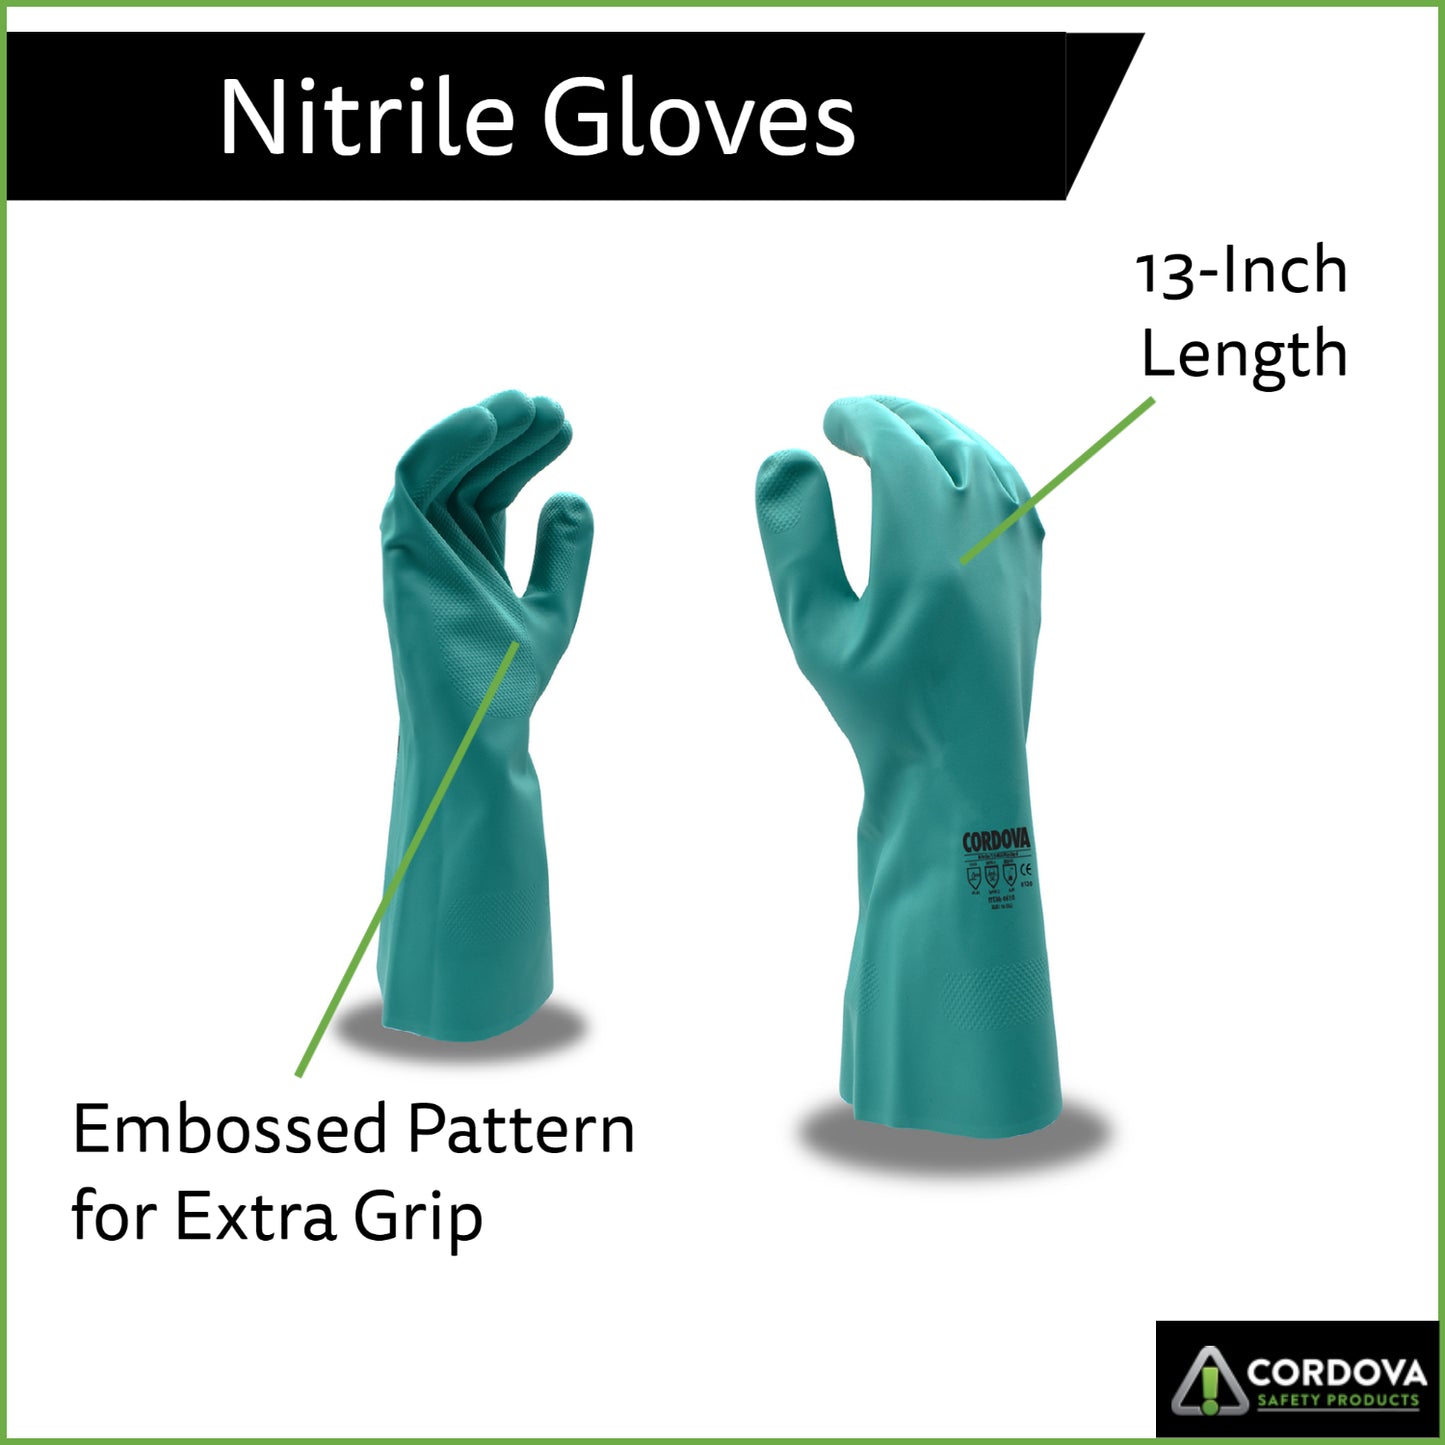 Premium Nitrile Gloves, 18-MIL, 13-Inch, 12-Pack